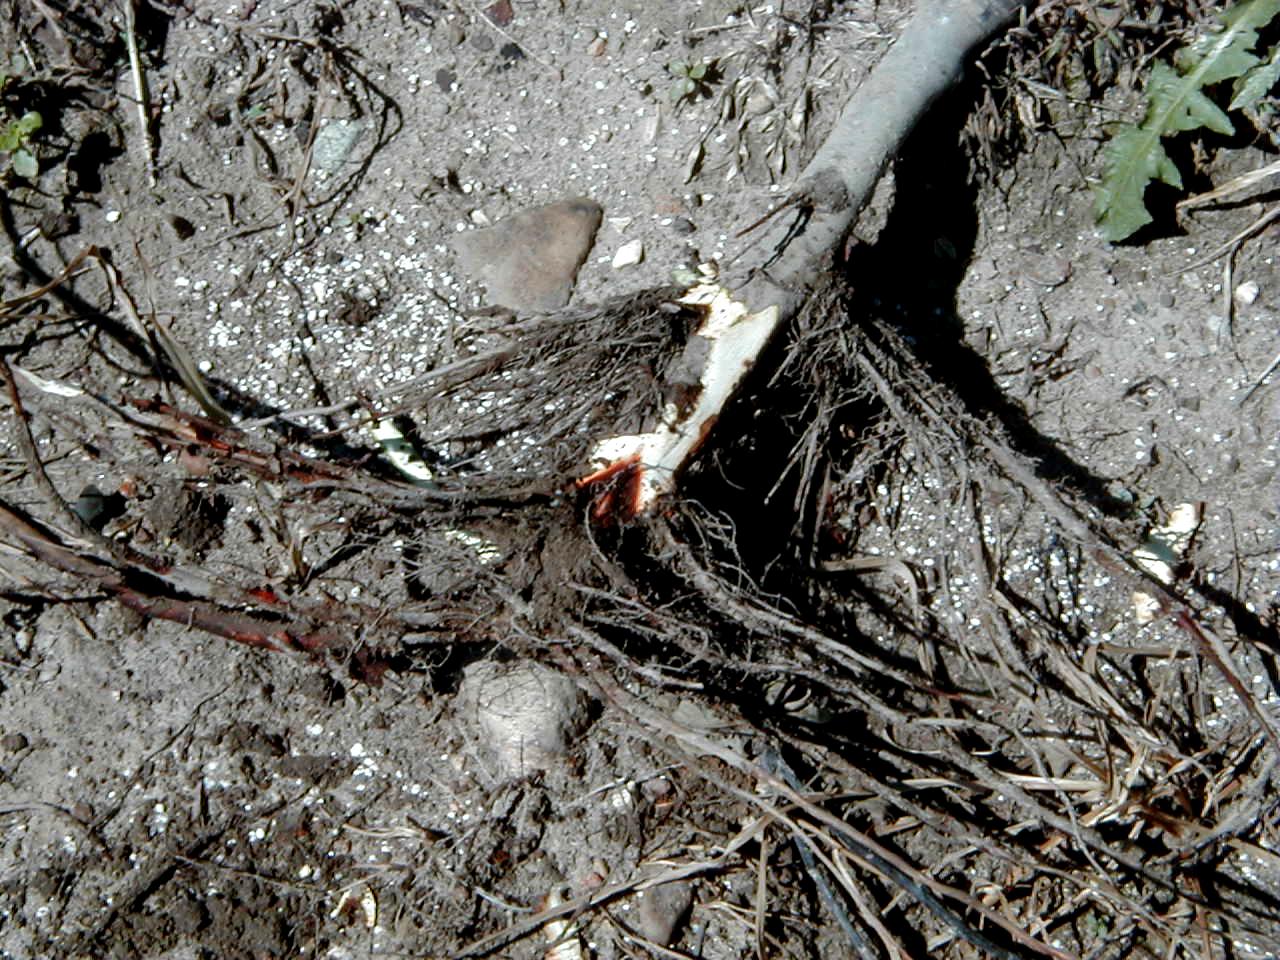 Collar rot symptoms on young tree (Longstroth, MSU)